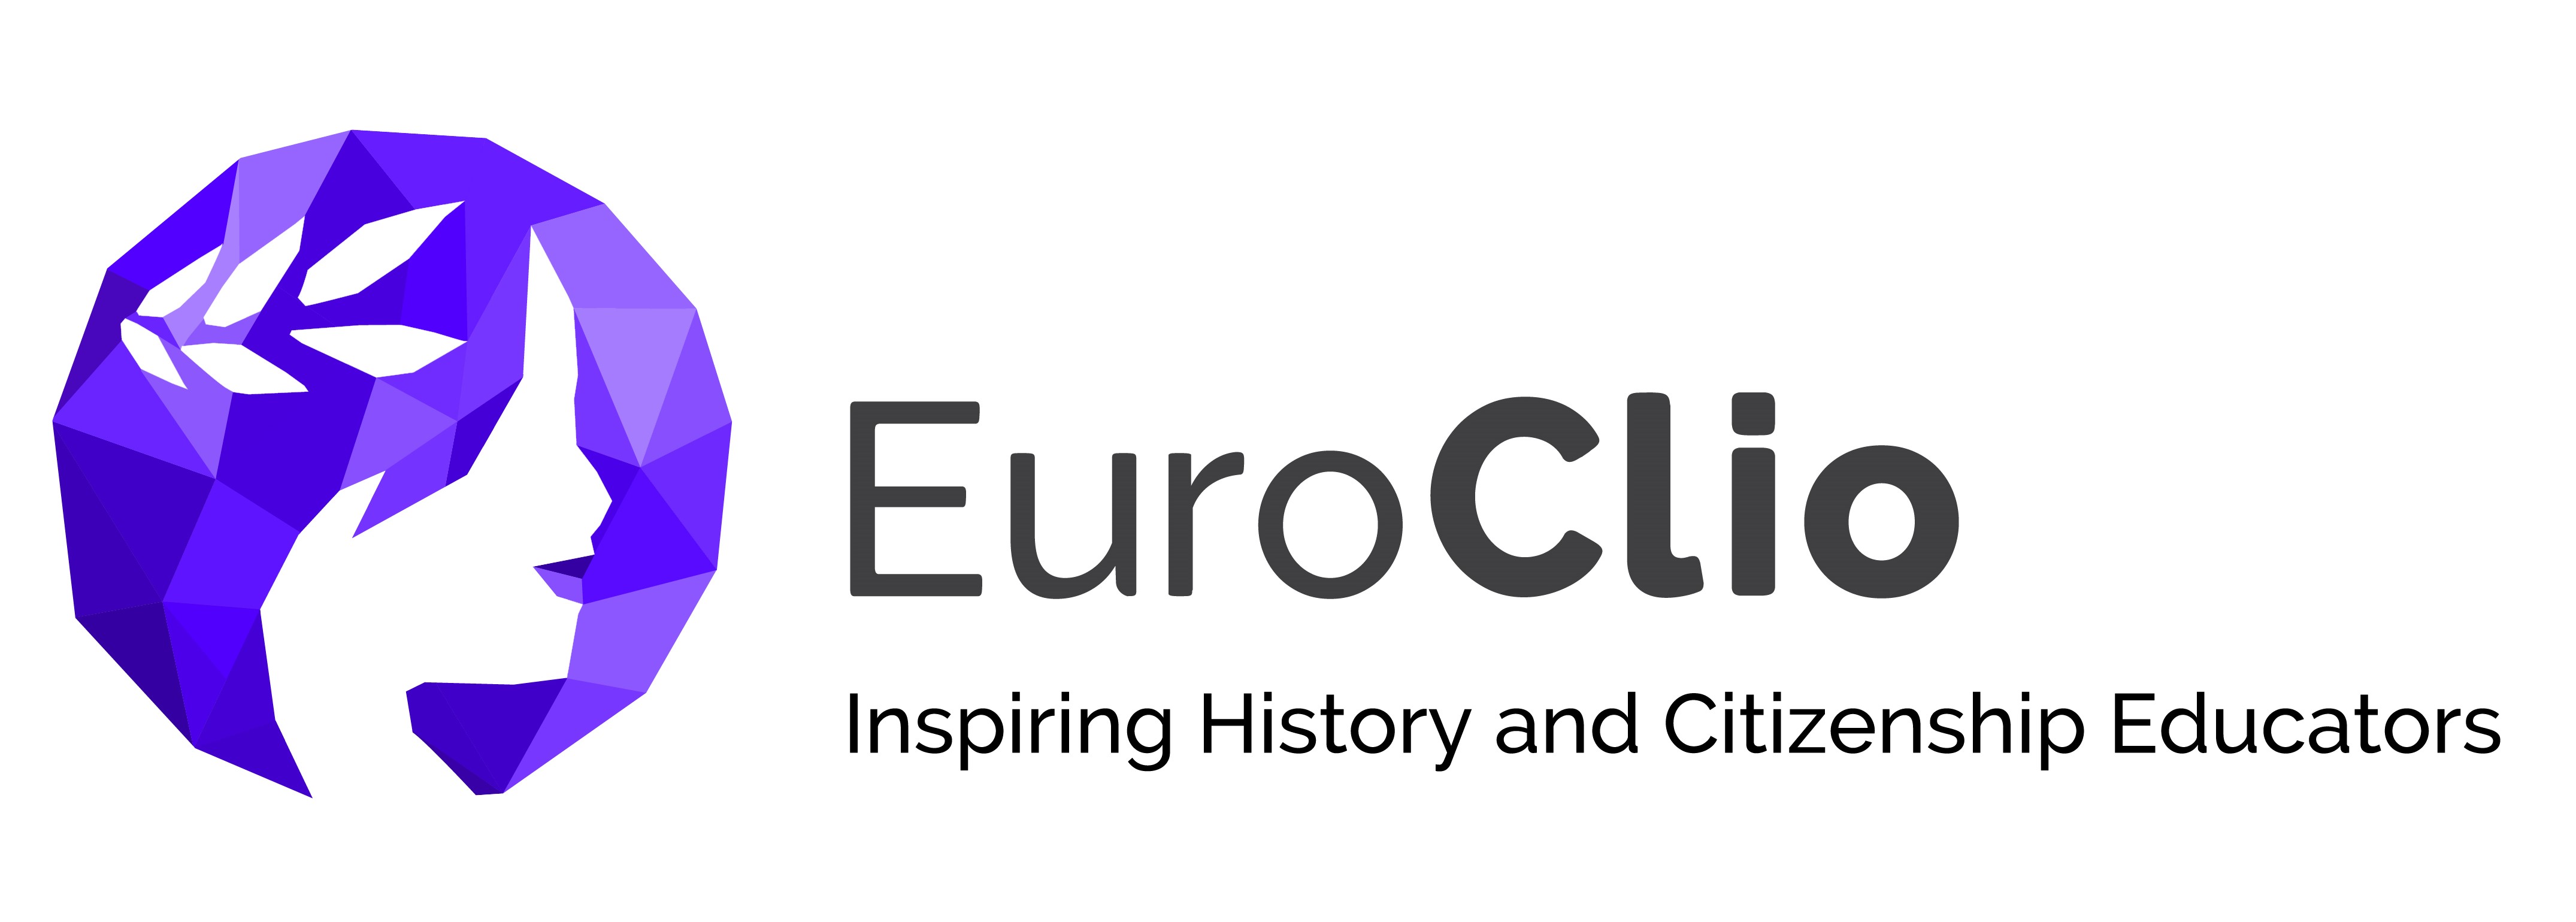 EuroClio - Inspiring History and Citizenship Educators